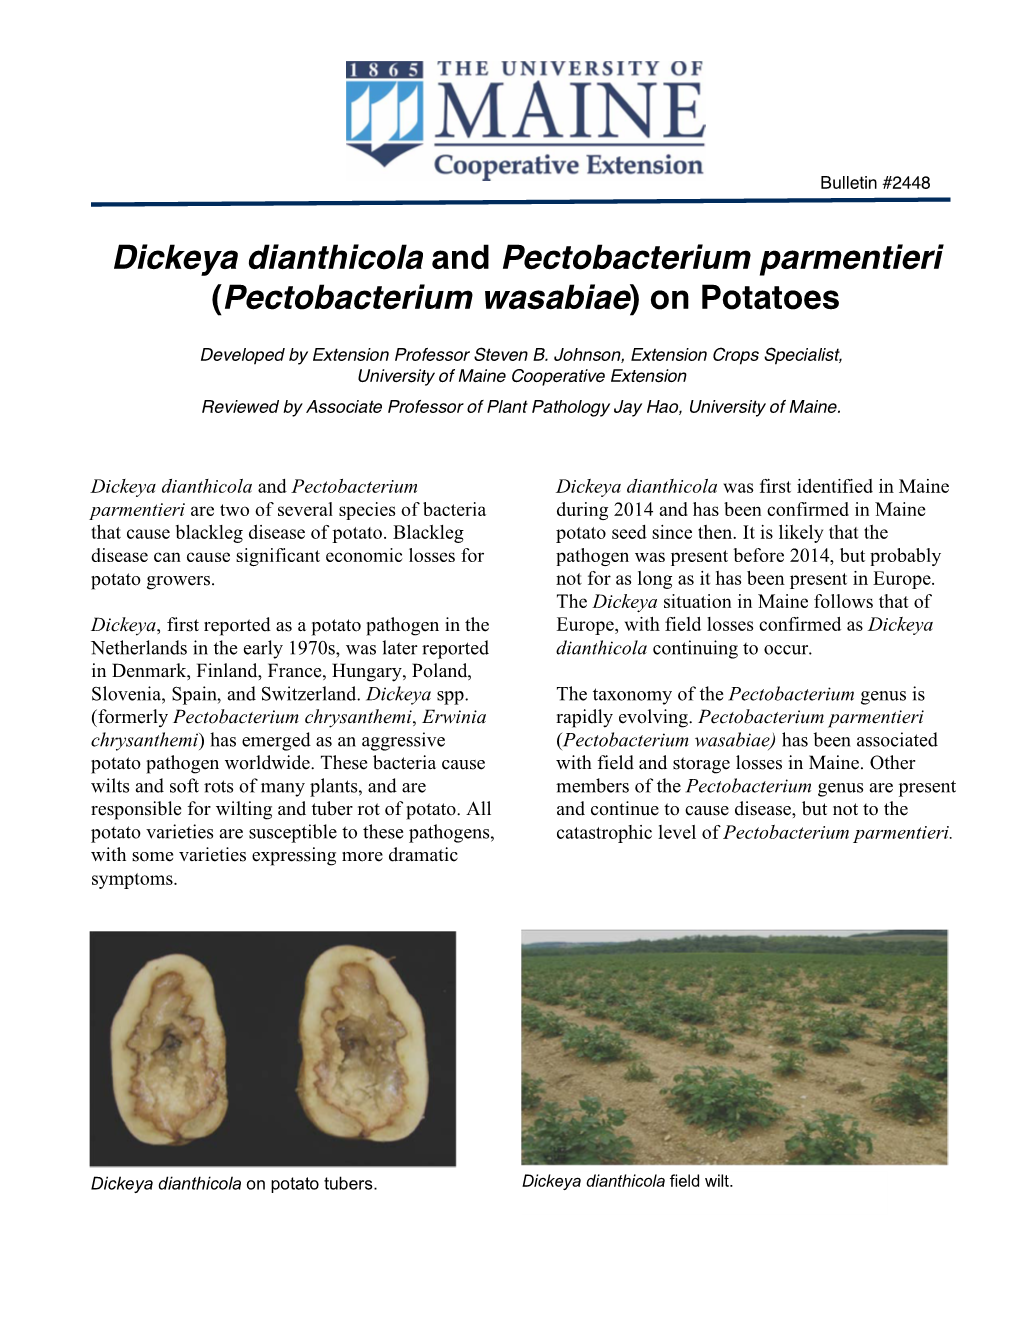 Dickeya Dianthicola and Pectobacterium Parmentieri (Pectobacterium Wasabiae) on Potatoes